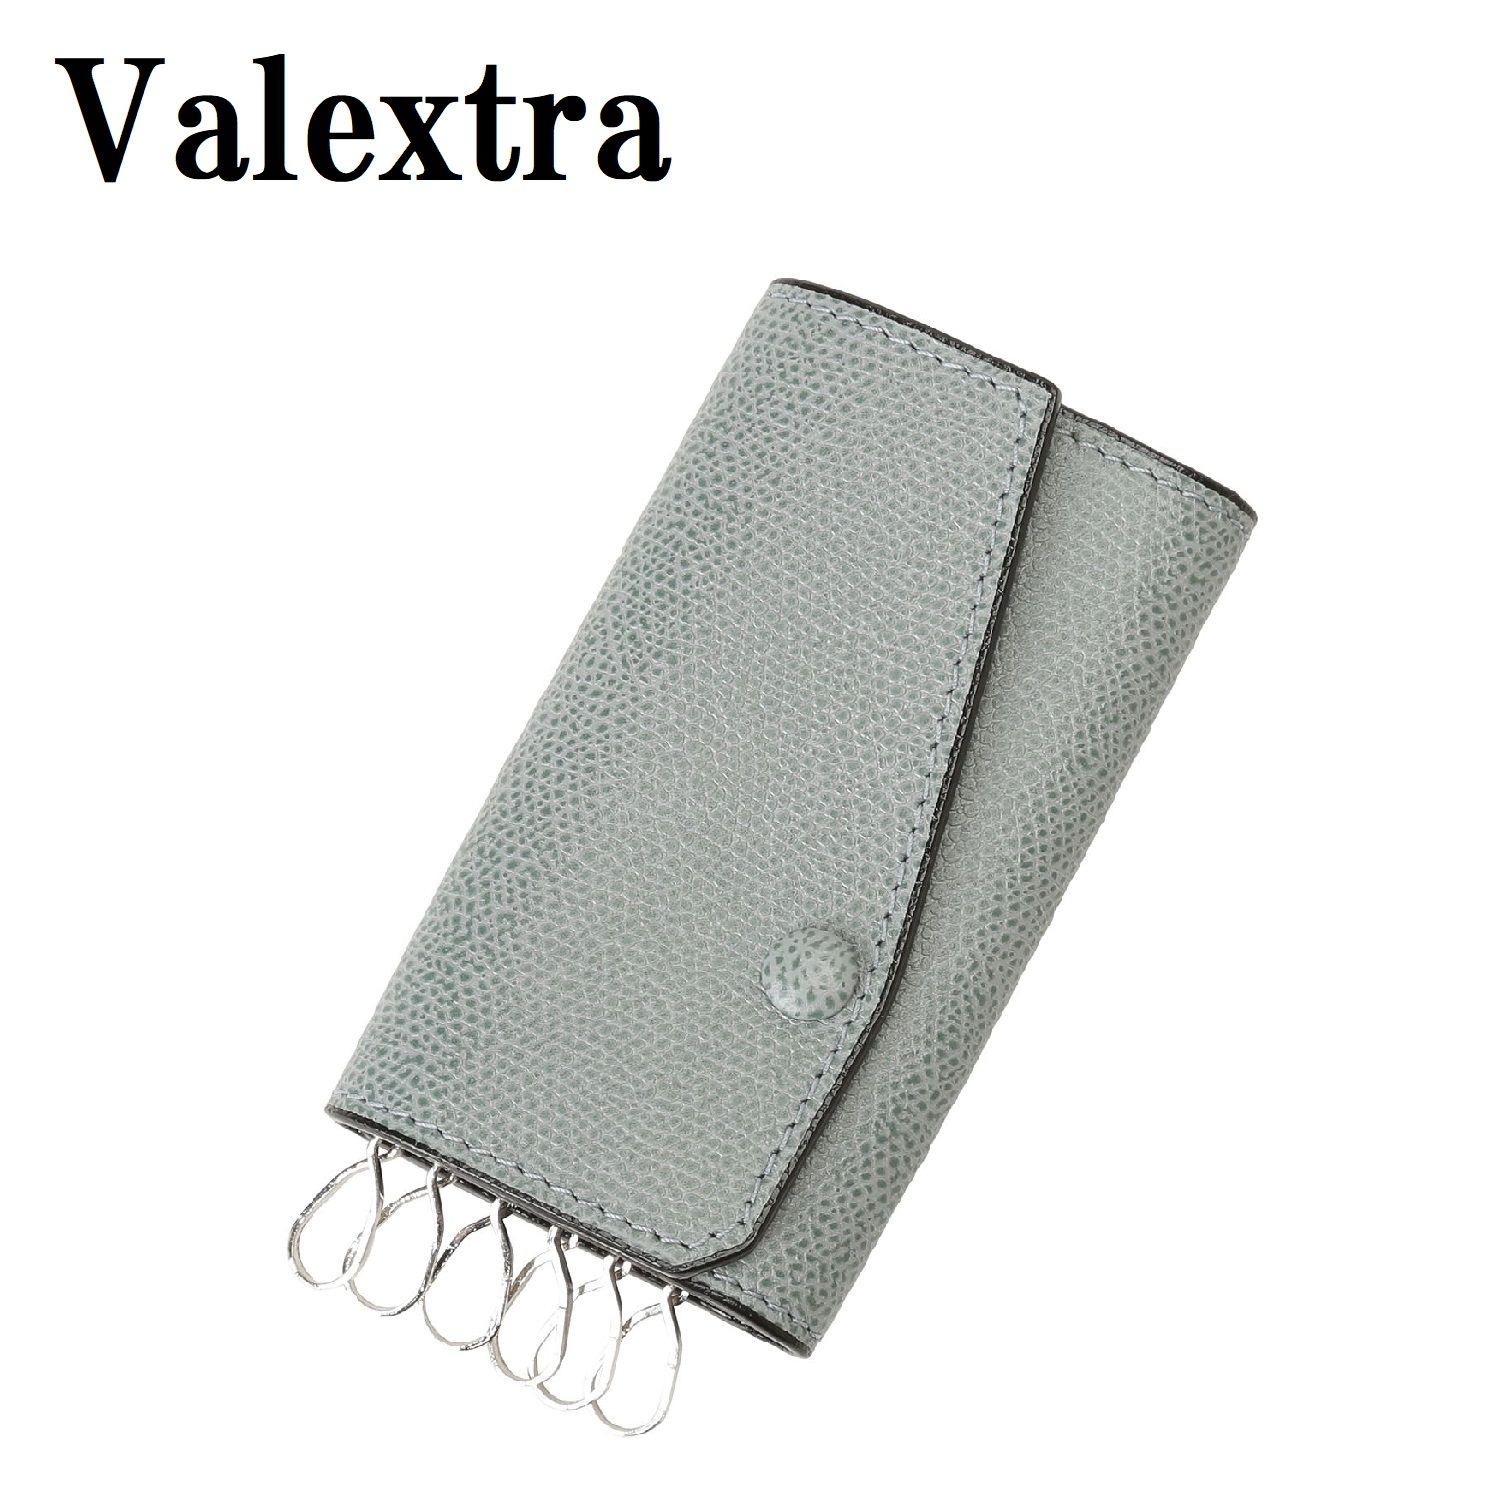 Valextra ヴァレクストラ V1L76 028 BP SGSR0076028LRDKH99 BP 6連 キーケース キーホルダー レザー  レディース メンズ パウダー ブルー - メルカリ